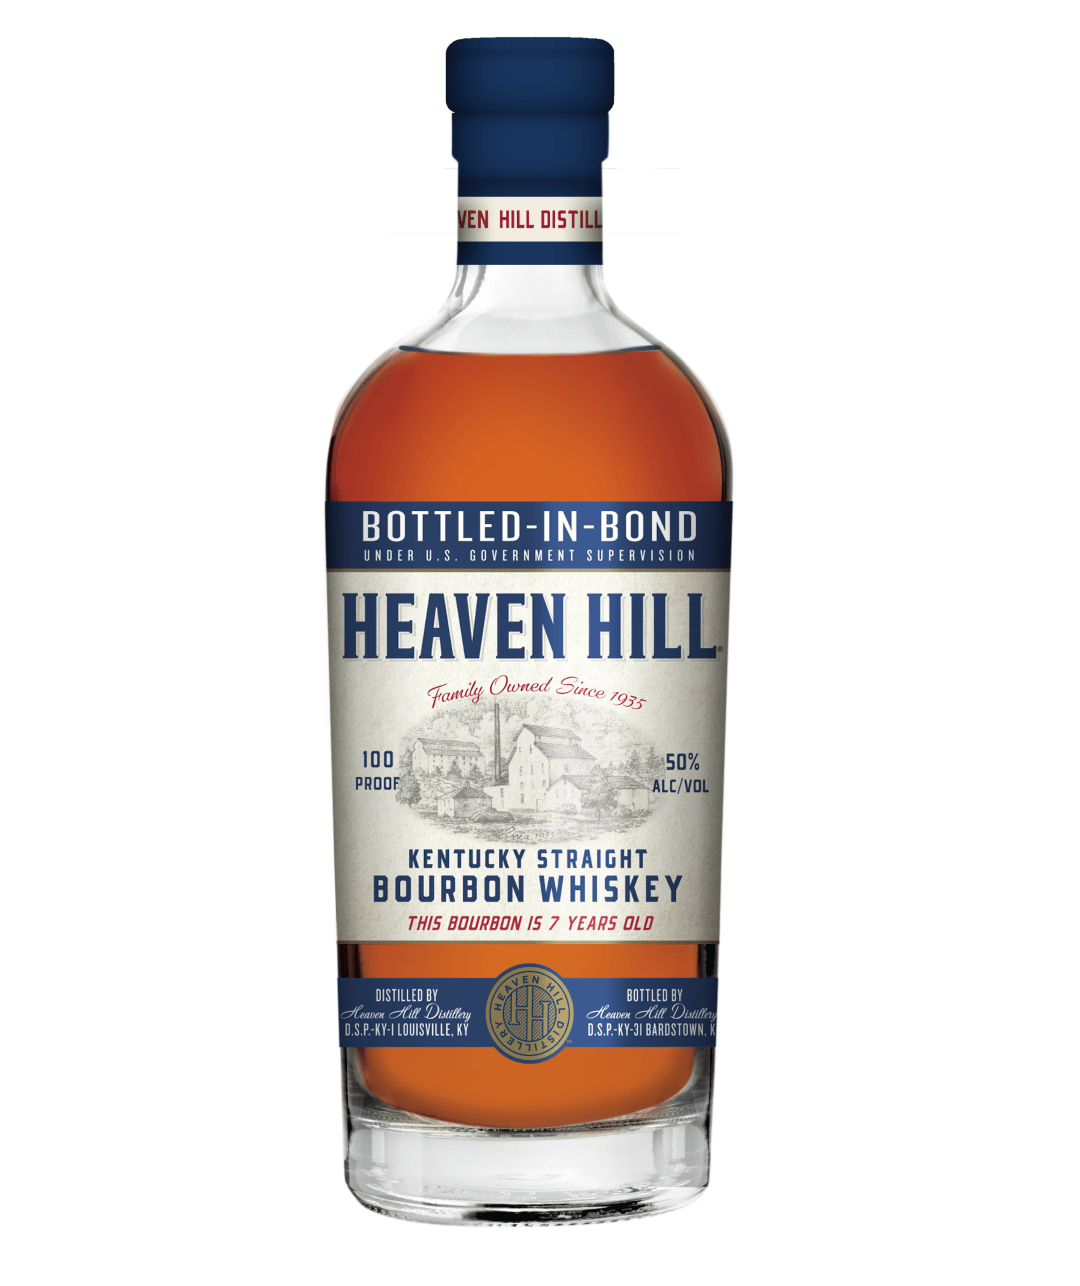 Review: Heaven Hill Bottled